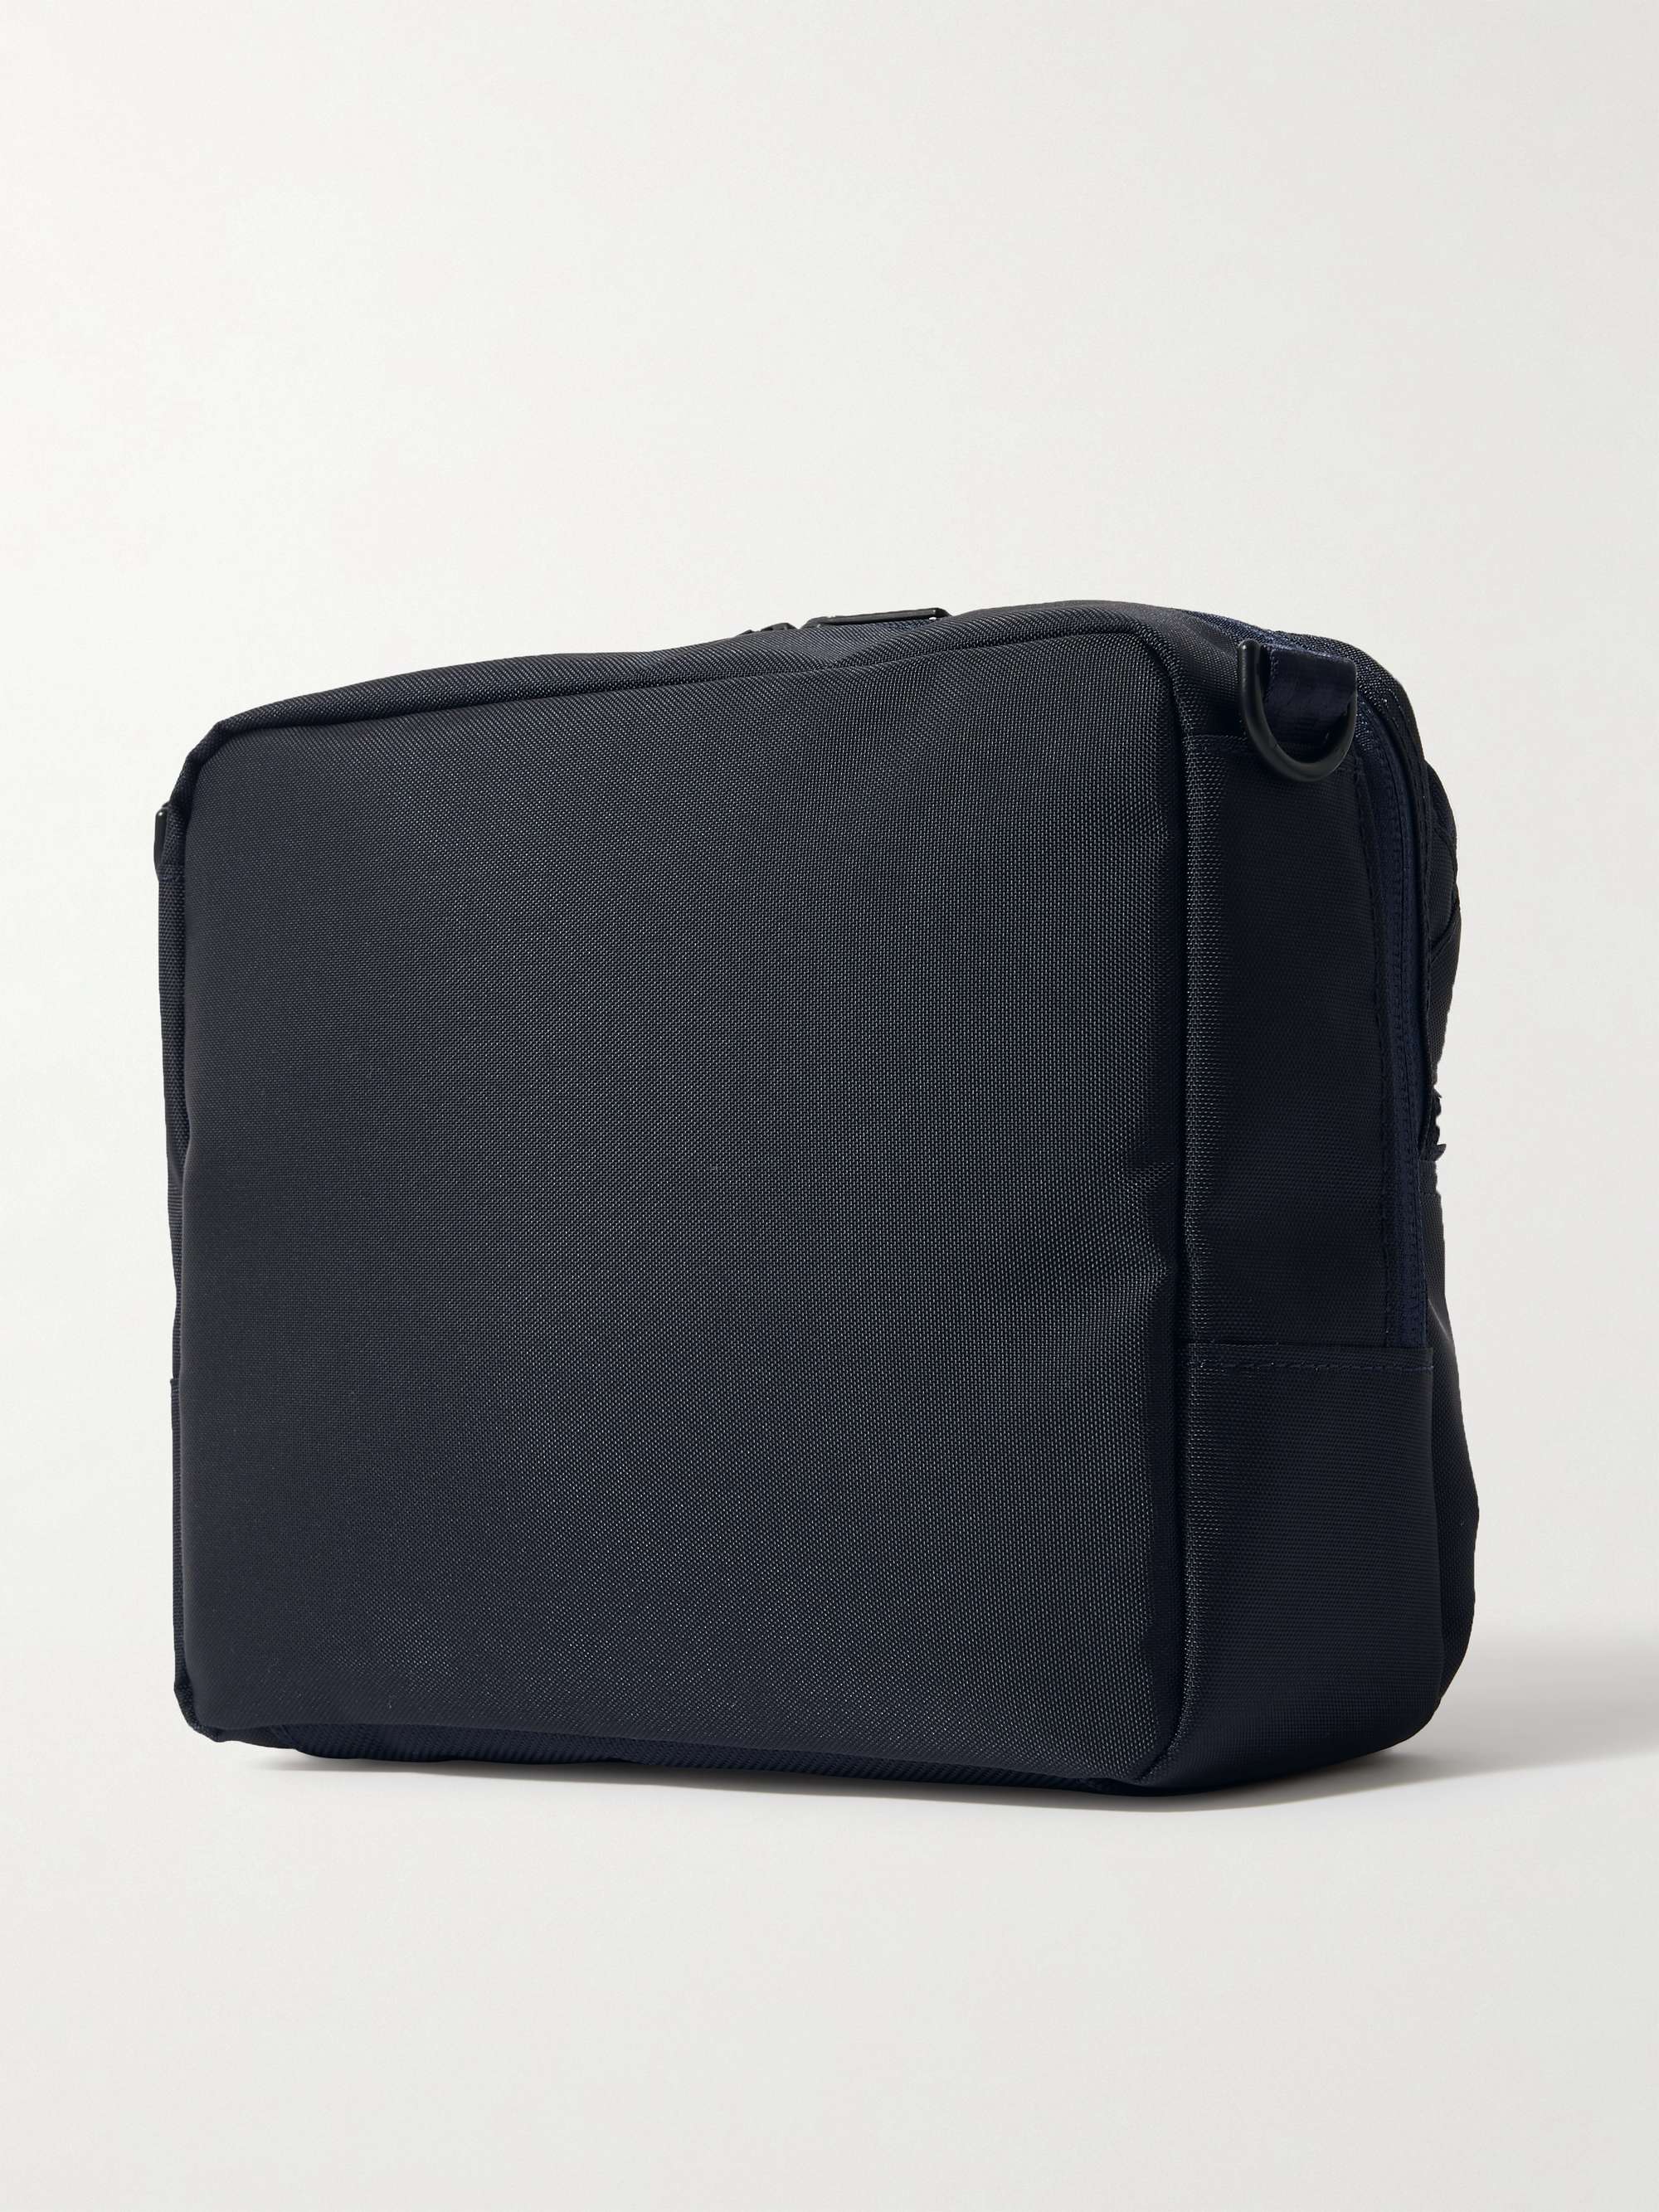 MASTER-PIECE Leather-Trimmed Nylon Messenger Bag